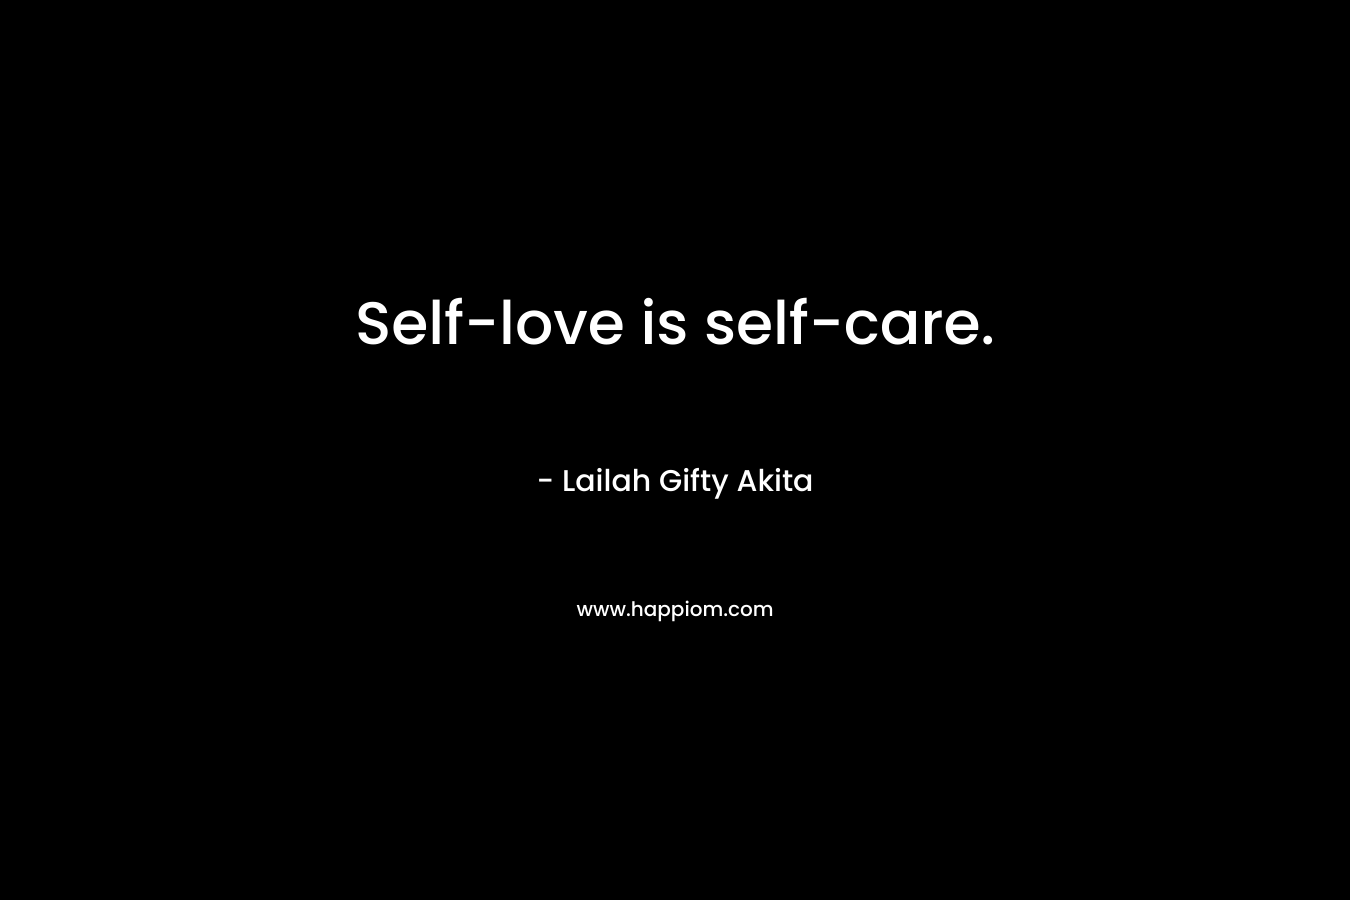 Self-love is self-care.